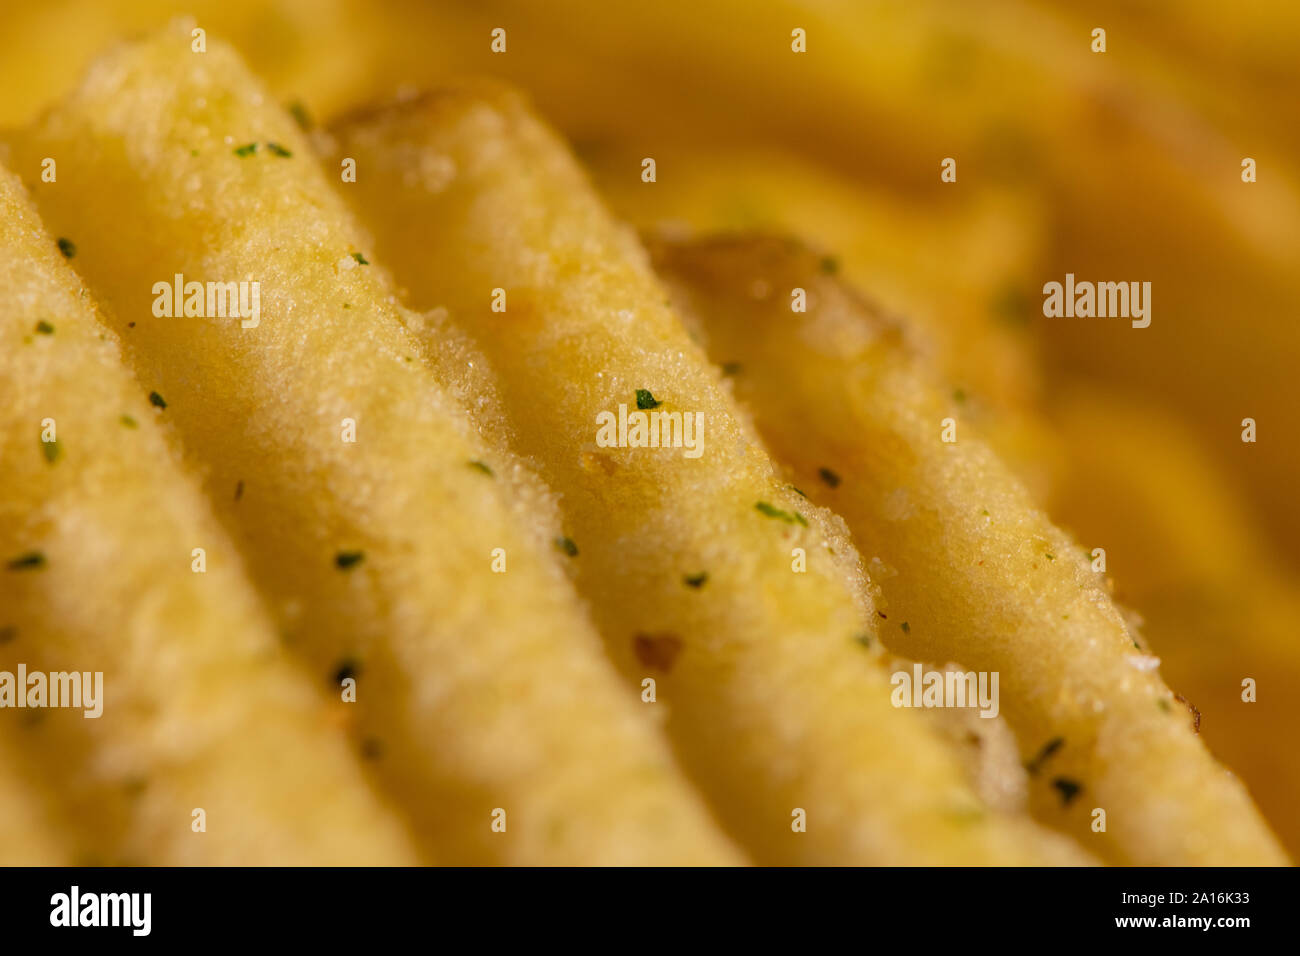 Macro photo of golden fried potato chips. Stock Photo